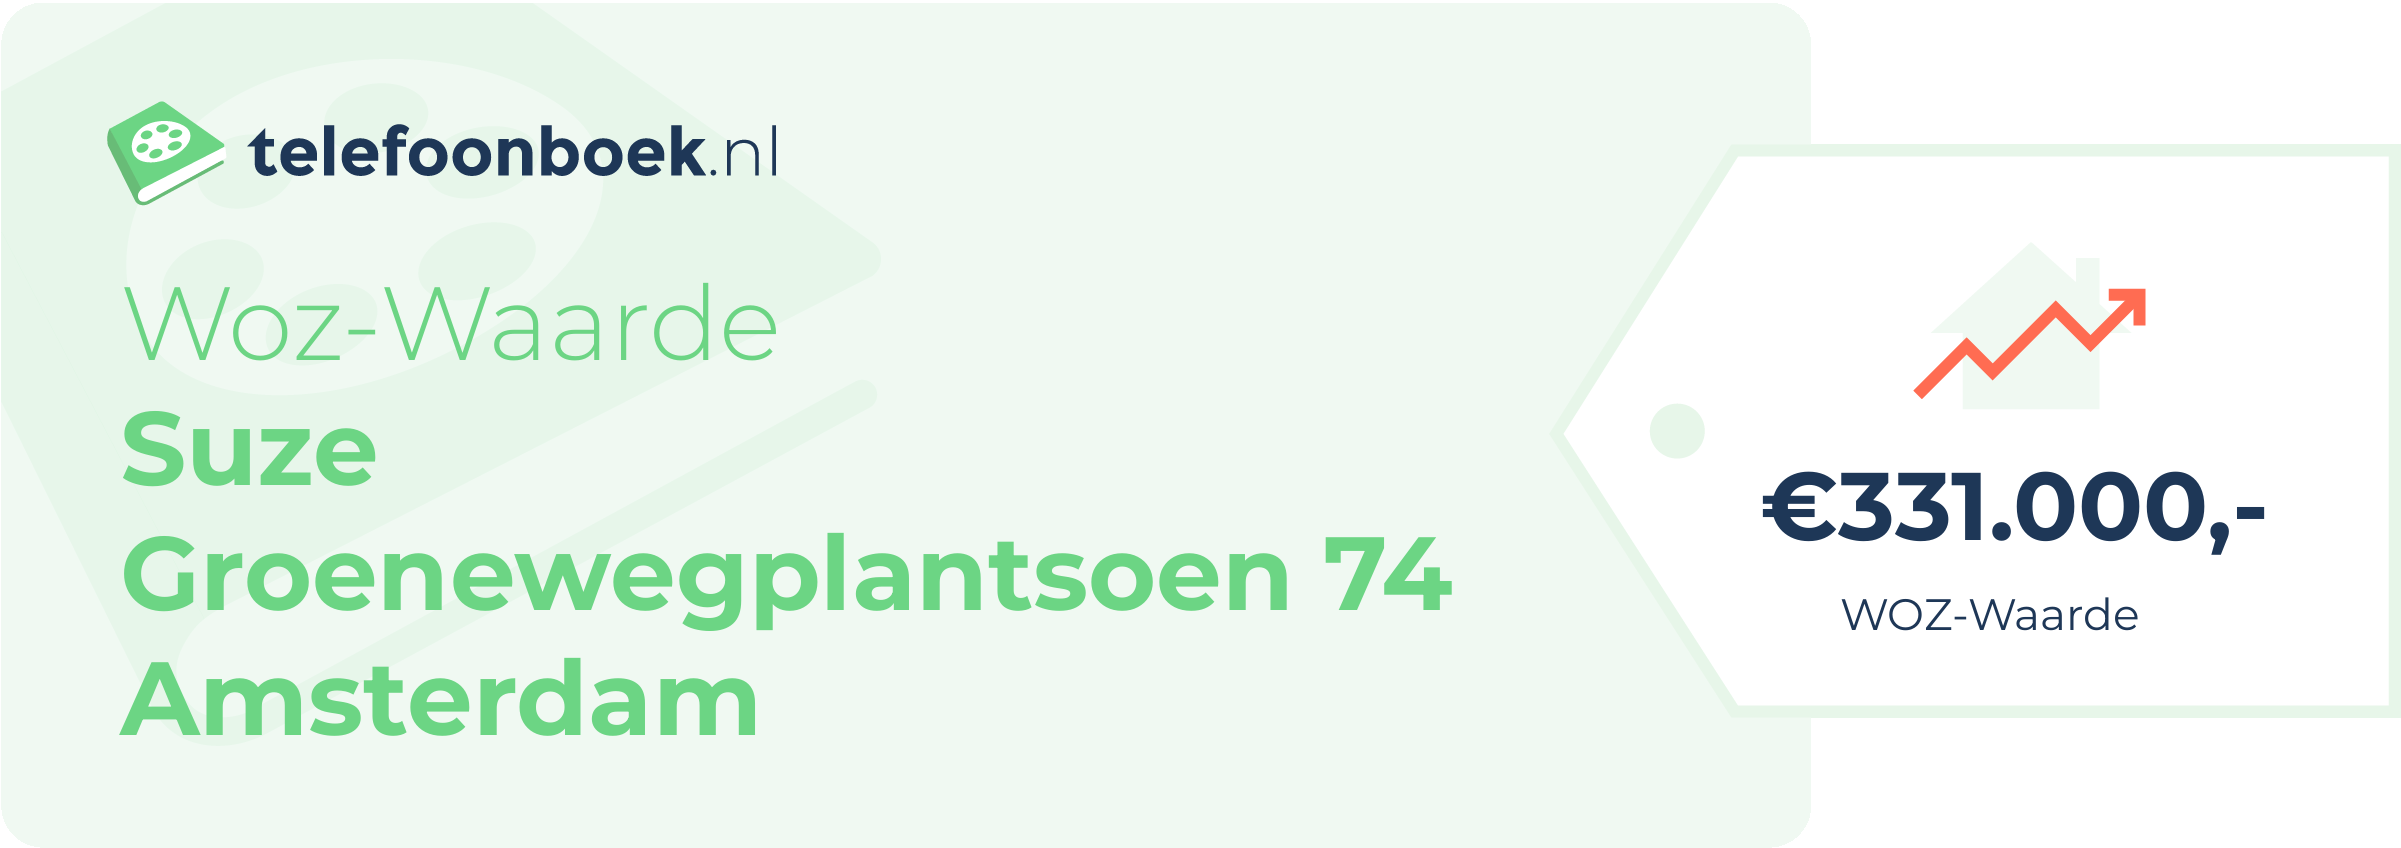 WOZ-waarde Suze Groenewegplantsoen 74 Amsterdam